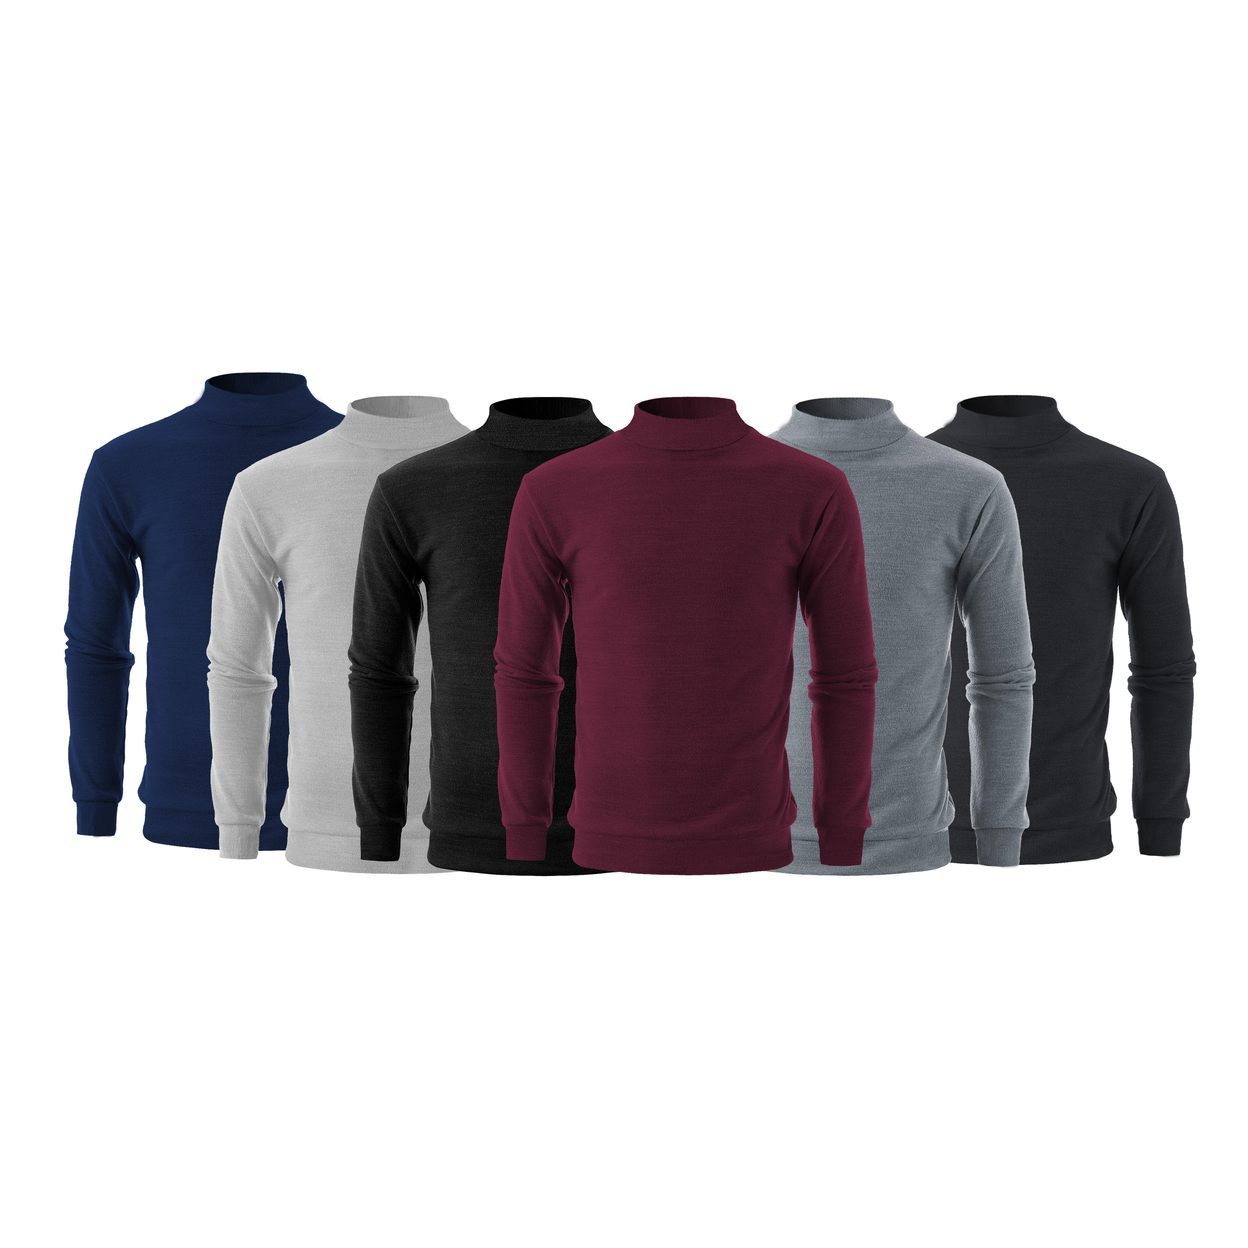 3-Pack: Men's Winter Warm Cozy Knit Slim Fit Mock Neck Sweater - Small